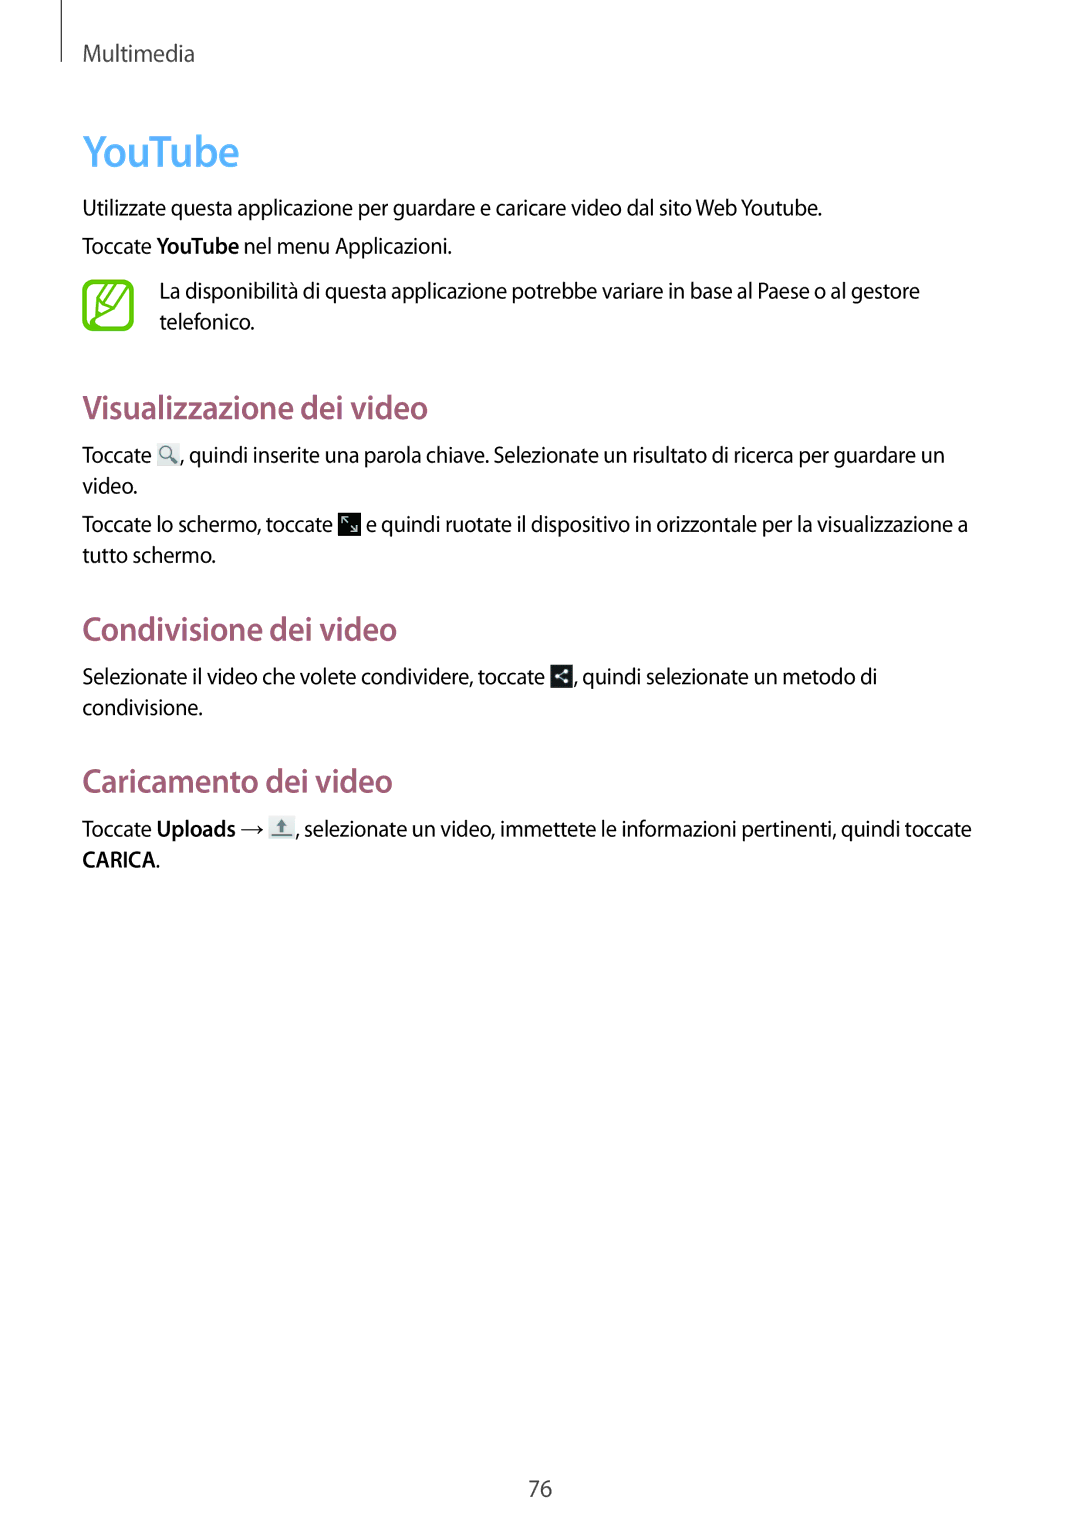 Samsung GT-N8010ZWXITV, GT-N8010ZWATUR, GT-N8010EAXITV manual YouTube, Visualizzazione dei video, Caricamento dei video 